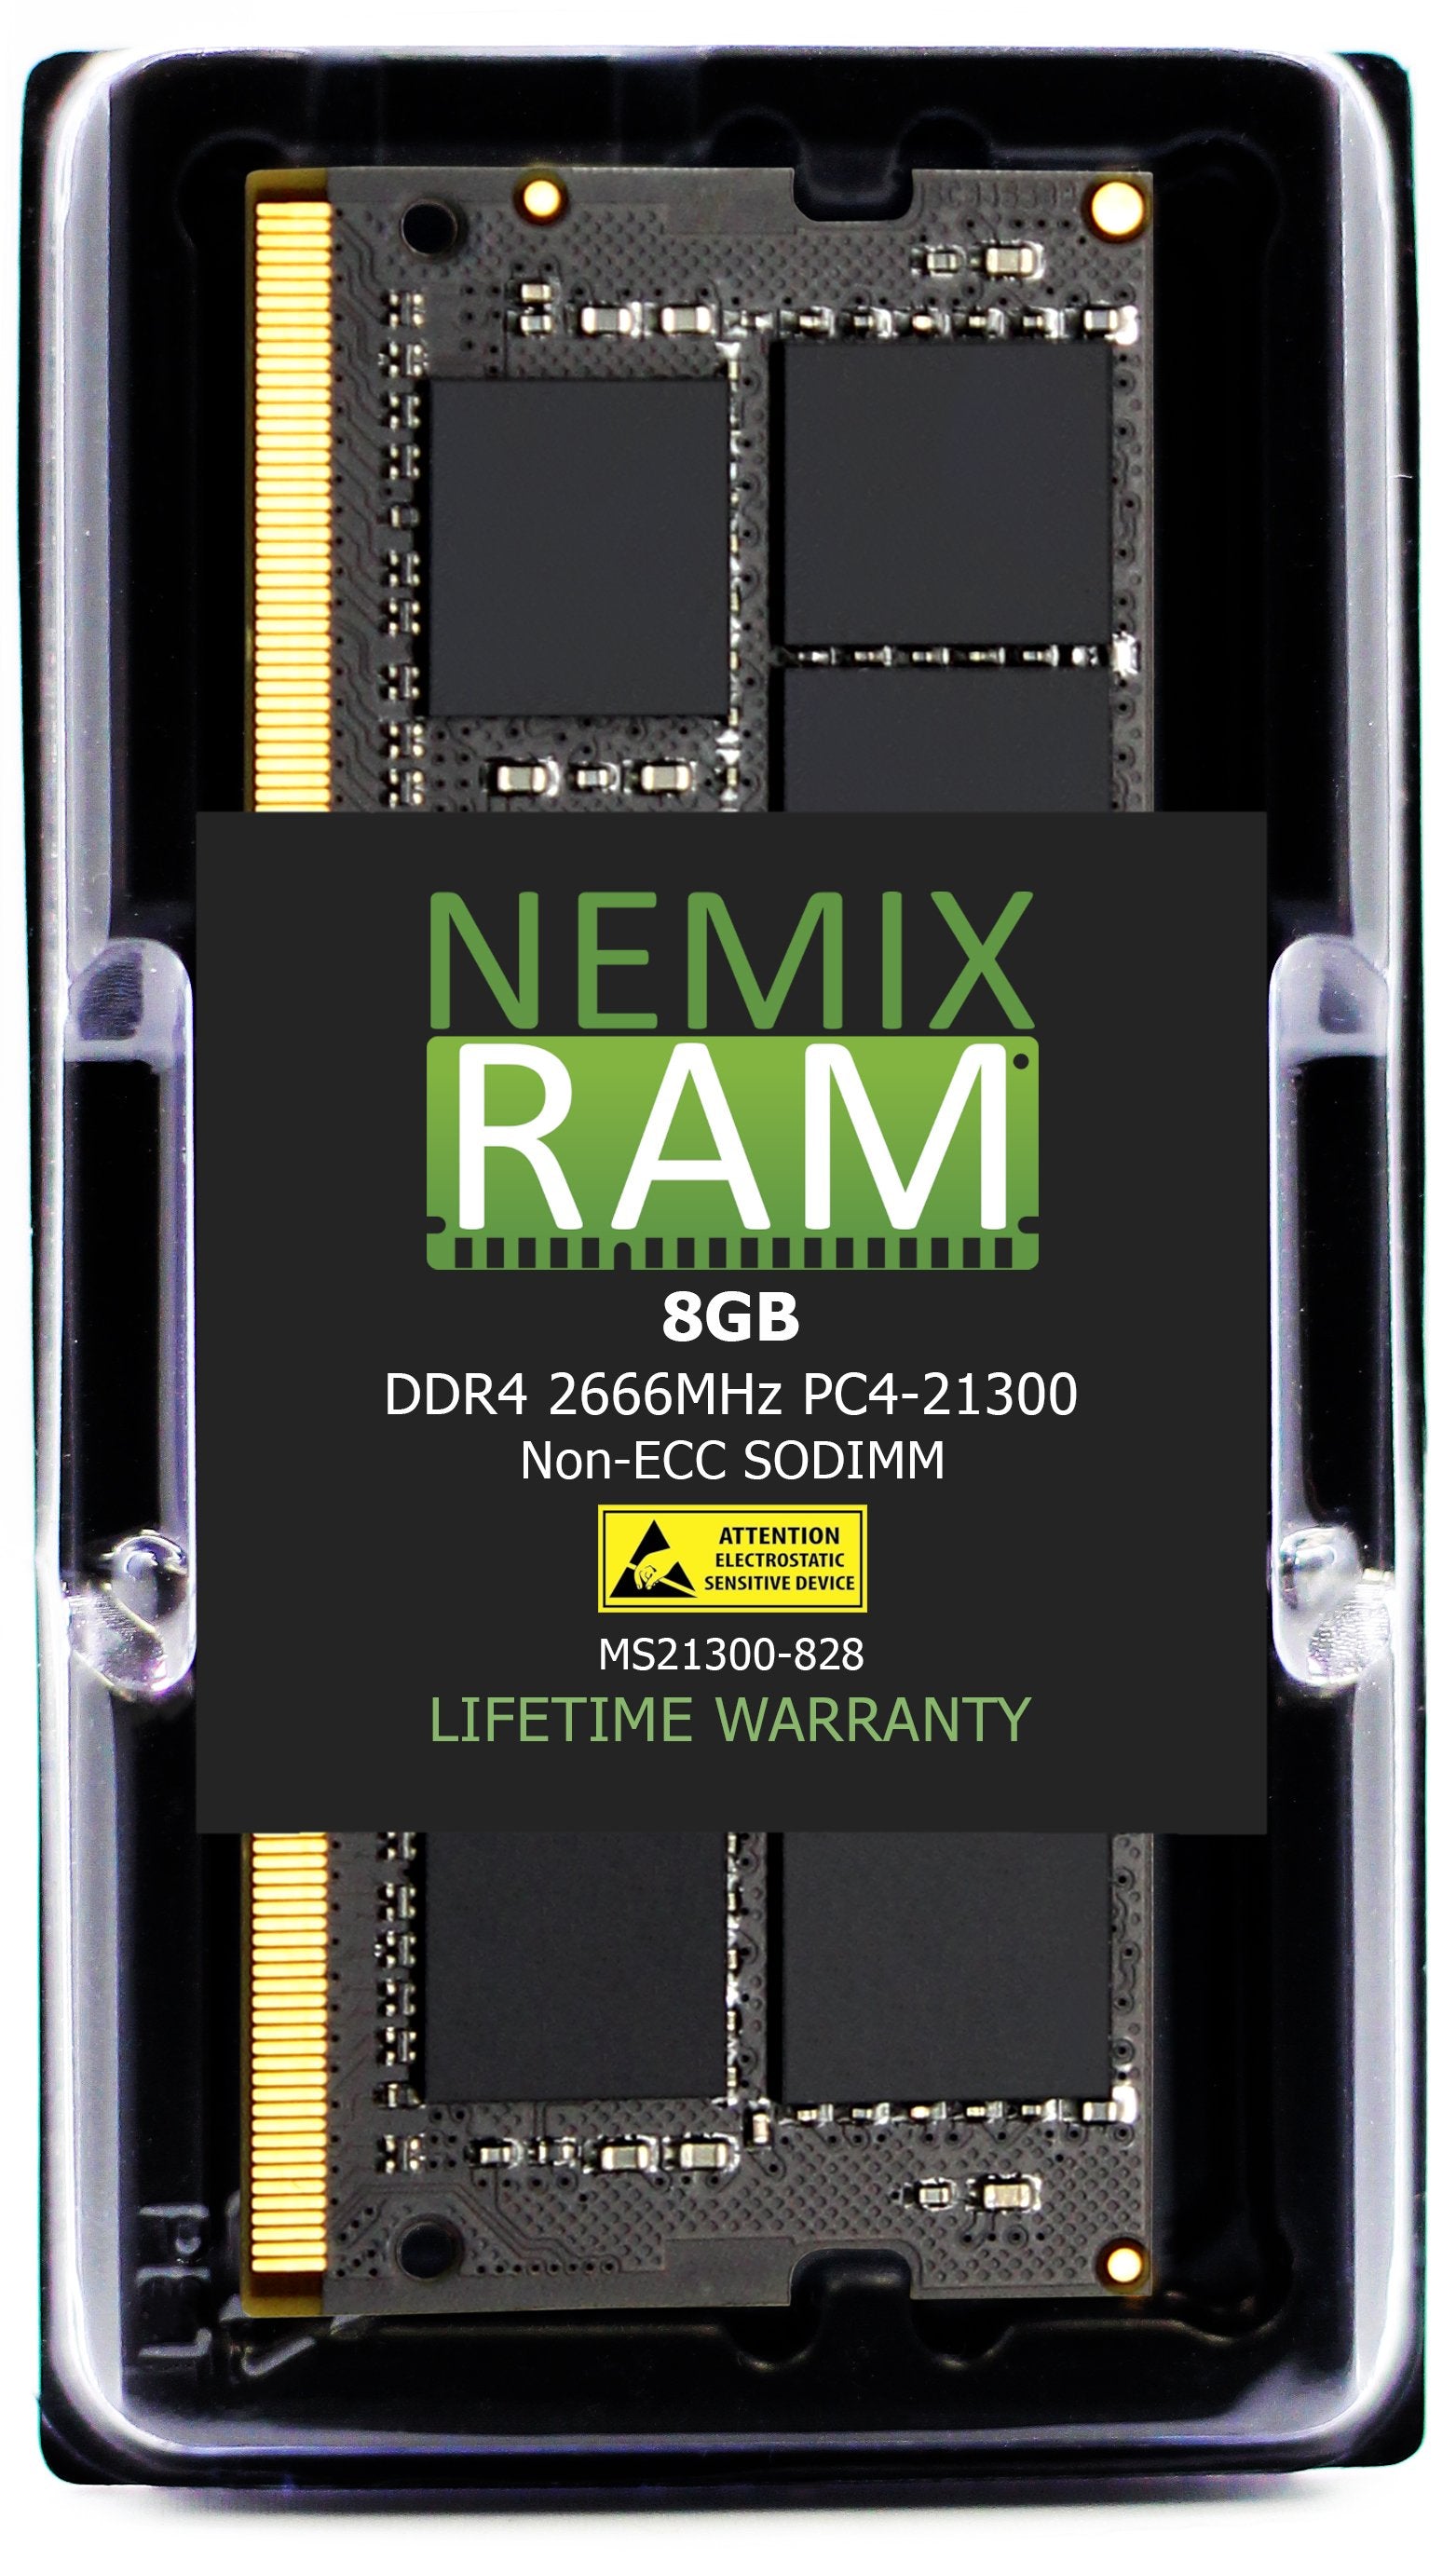 NEMIX RAM Memory Upgrade equivalent to ASUSTOR AS-8GD4 92M11-S8D40 SODIMM Memory Module